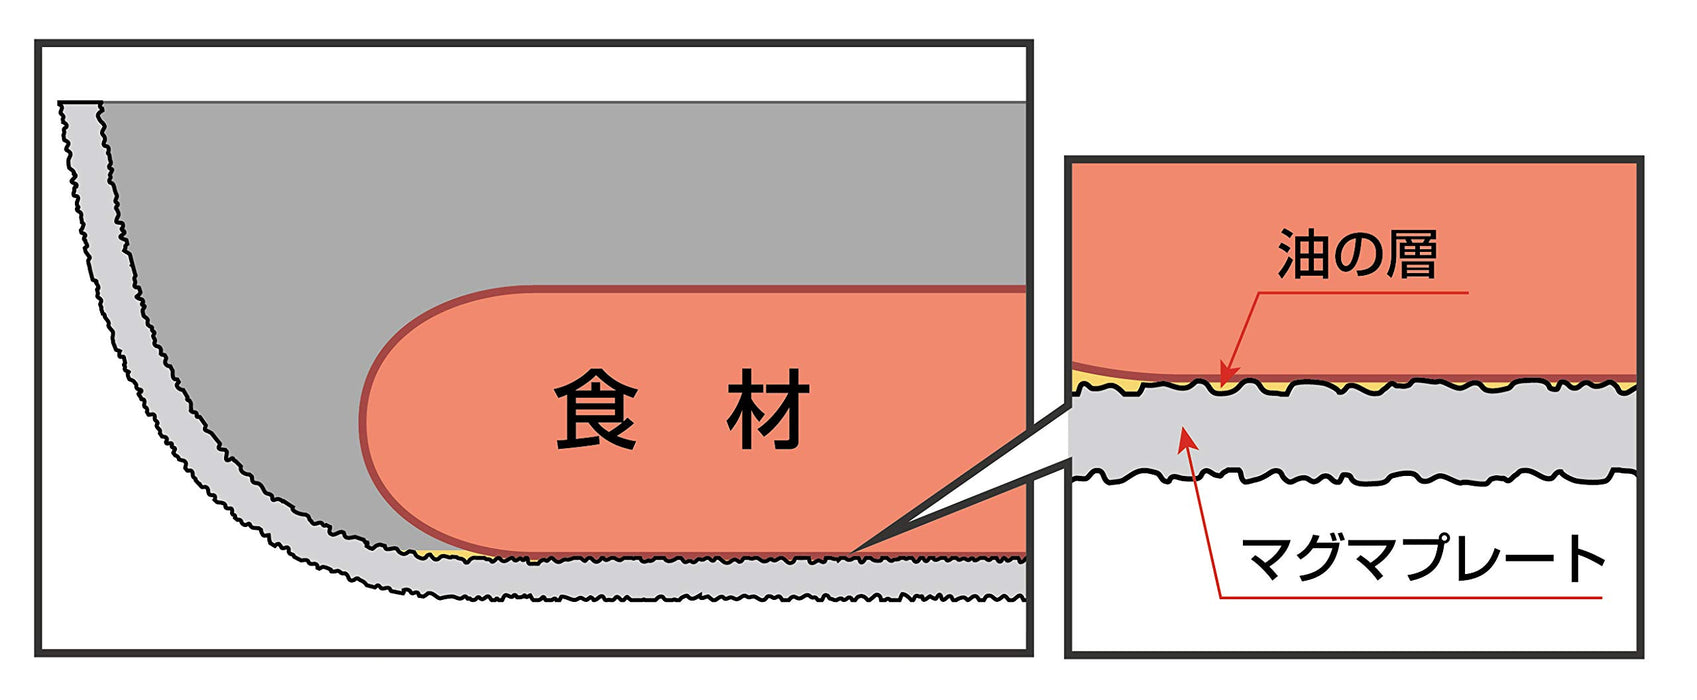 Takumi 日本 30 公分 Ih 相容炒鍋帶岩漿板和玻璃蓋 - 灰色